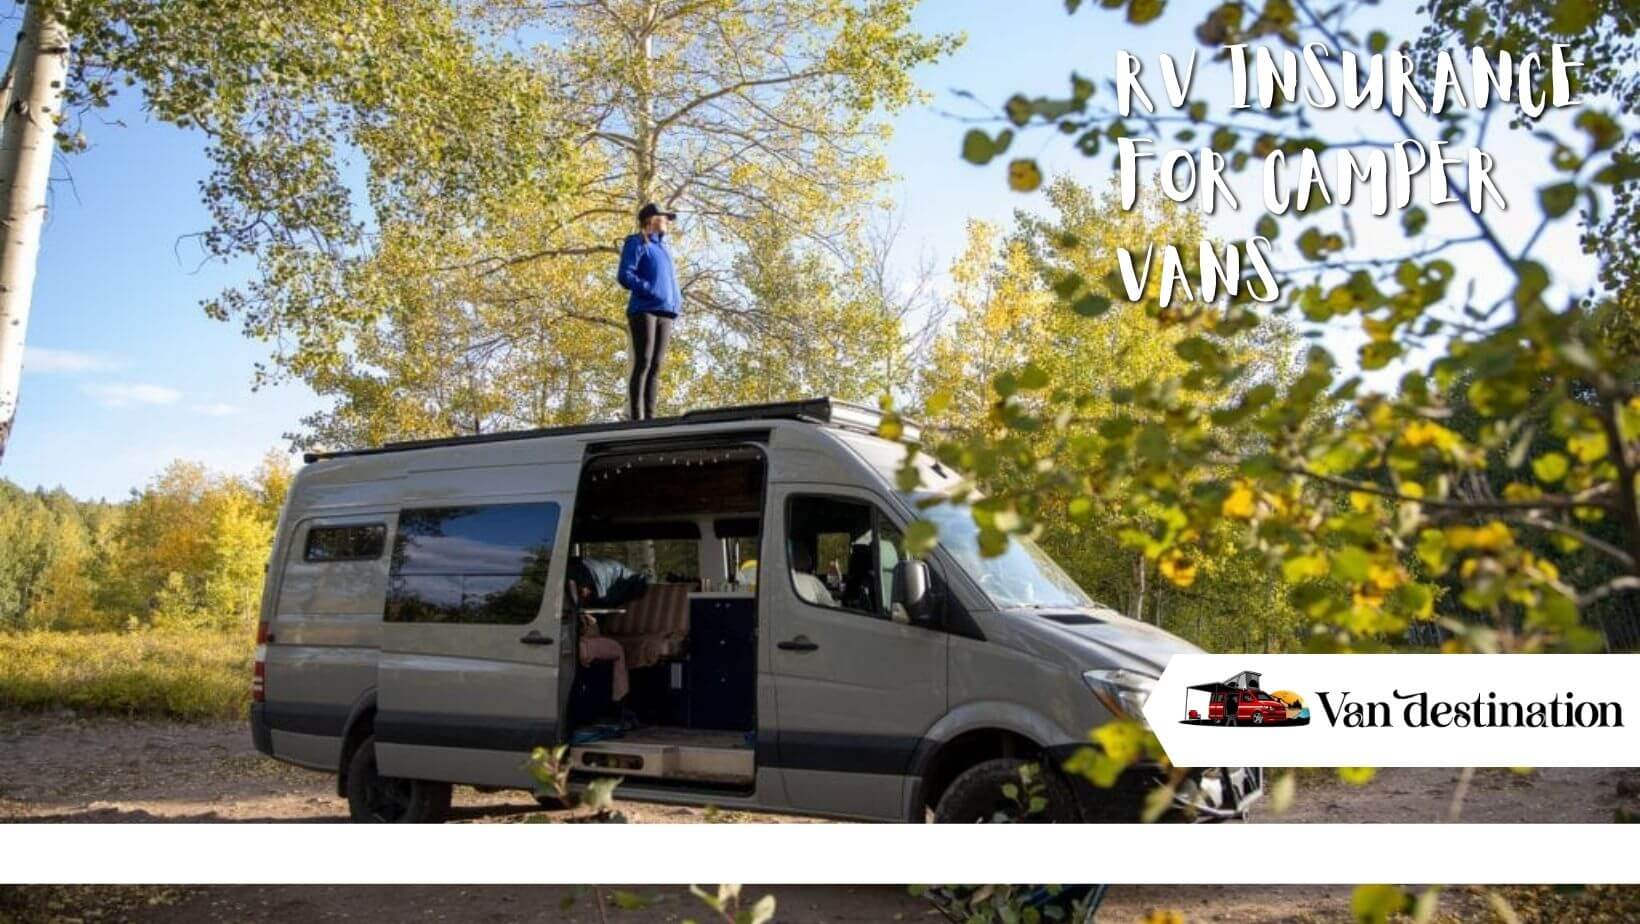 RV Insurance for Camper Vans